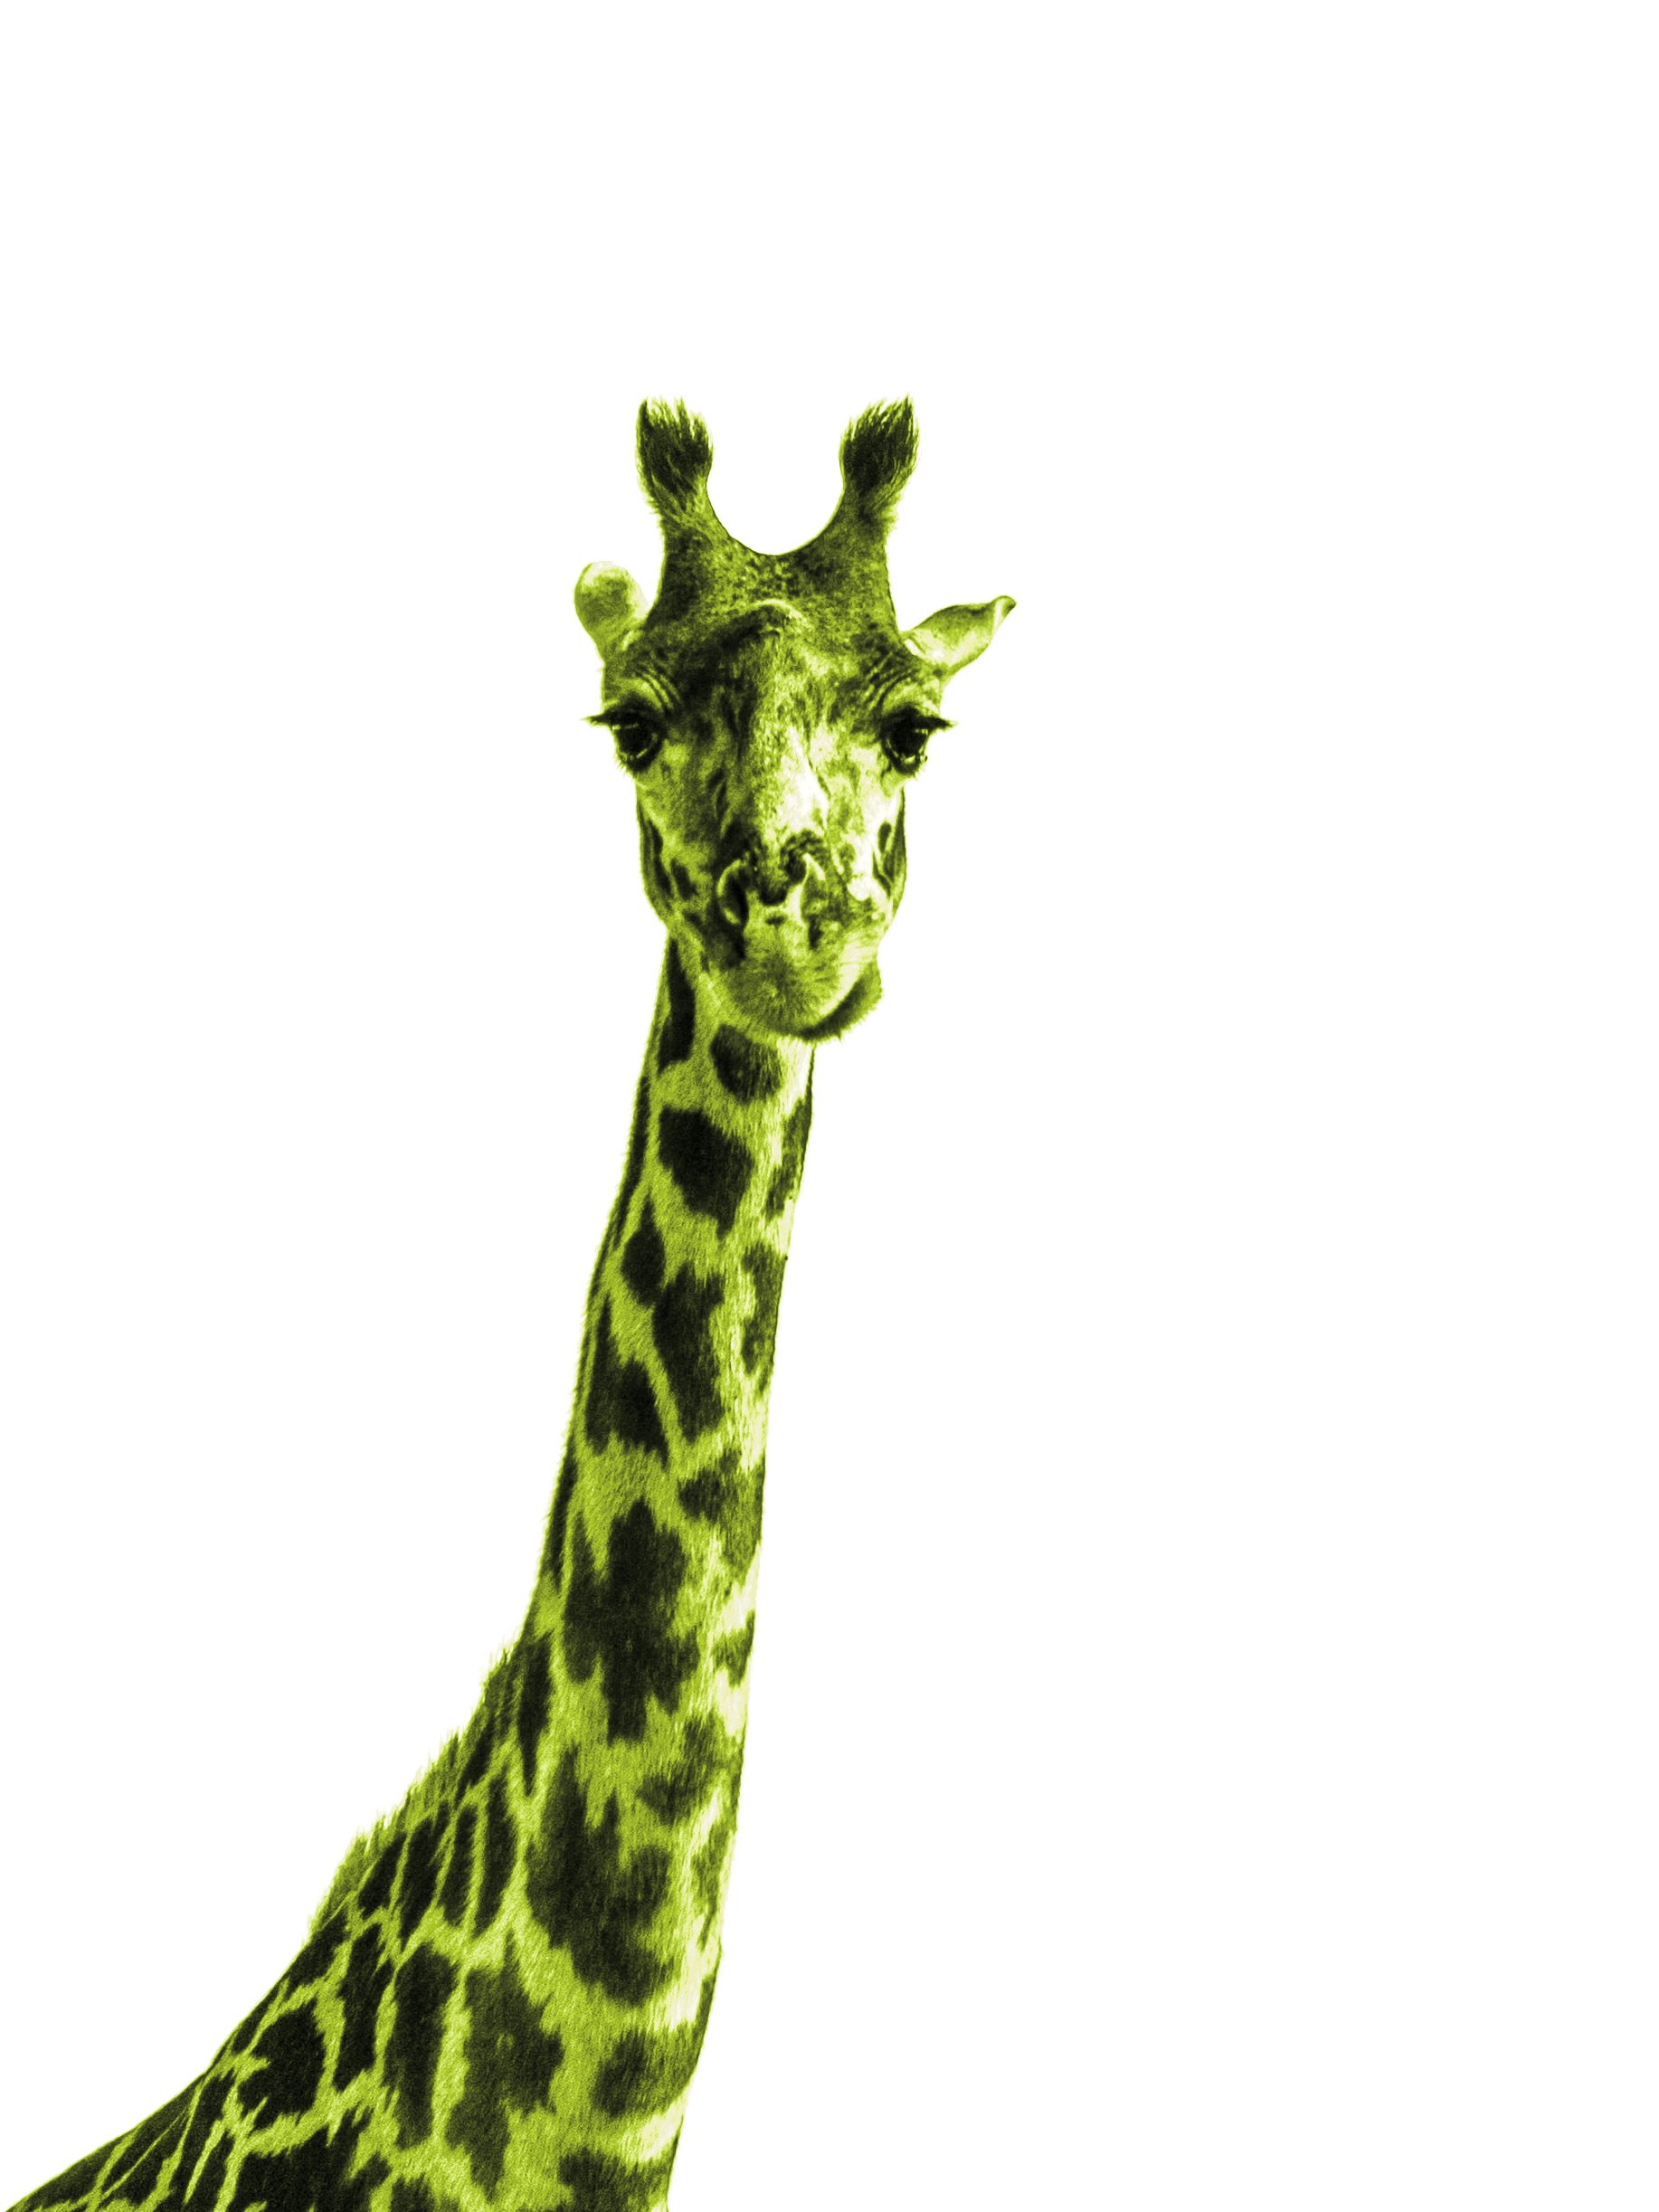 TheCuriousGiraffe